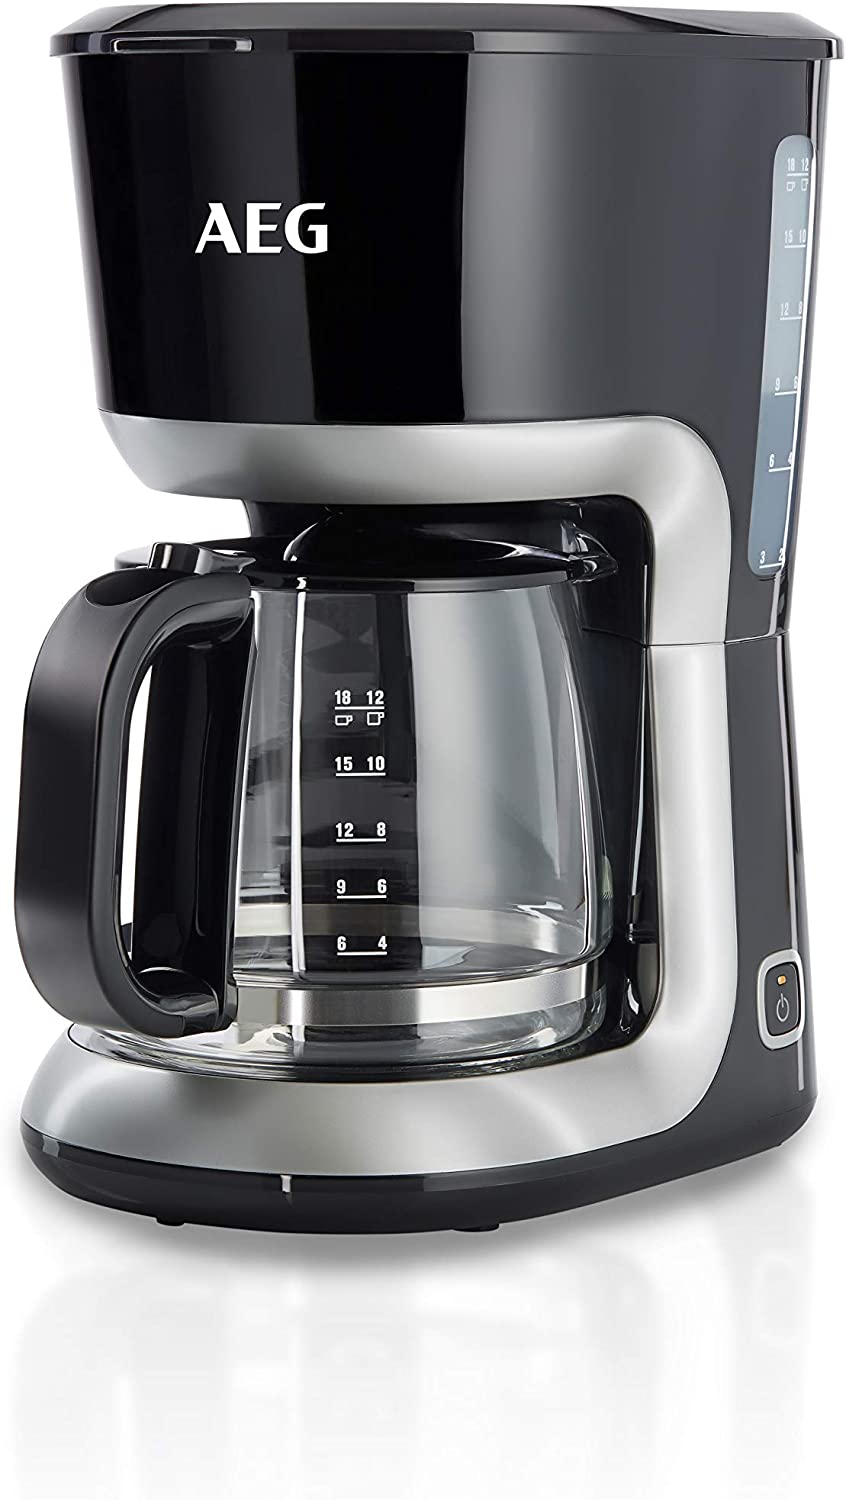 AEG Coffee Maker PerfectMorning KF3300 (1080 watts, 1.5 liters, water level indicator, anti-drip valve, keep warm function) Black / Silver